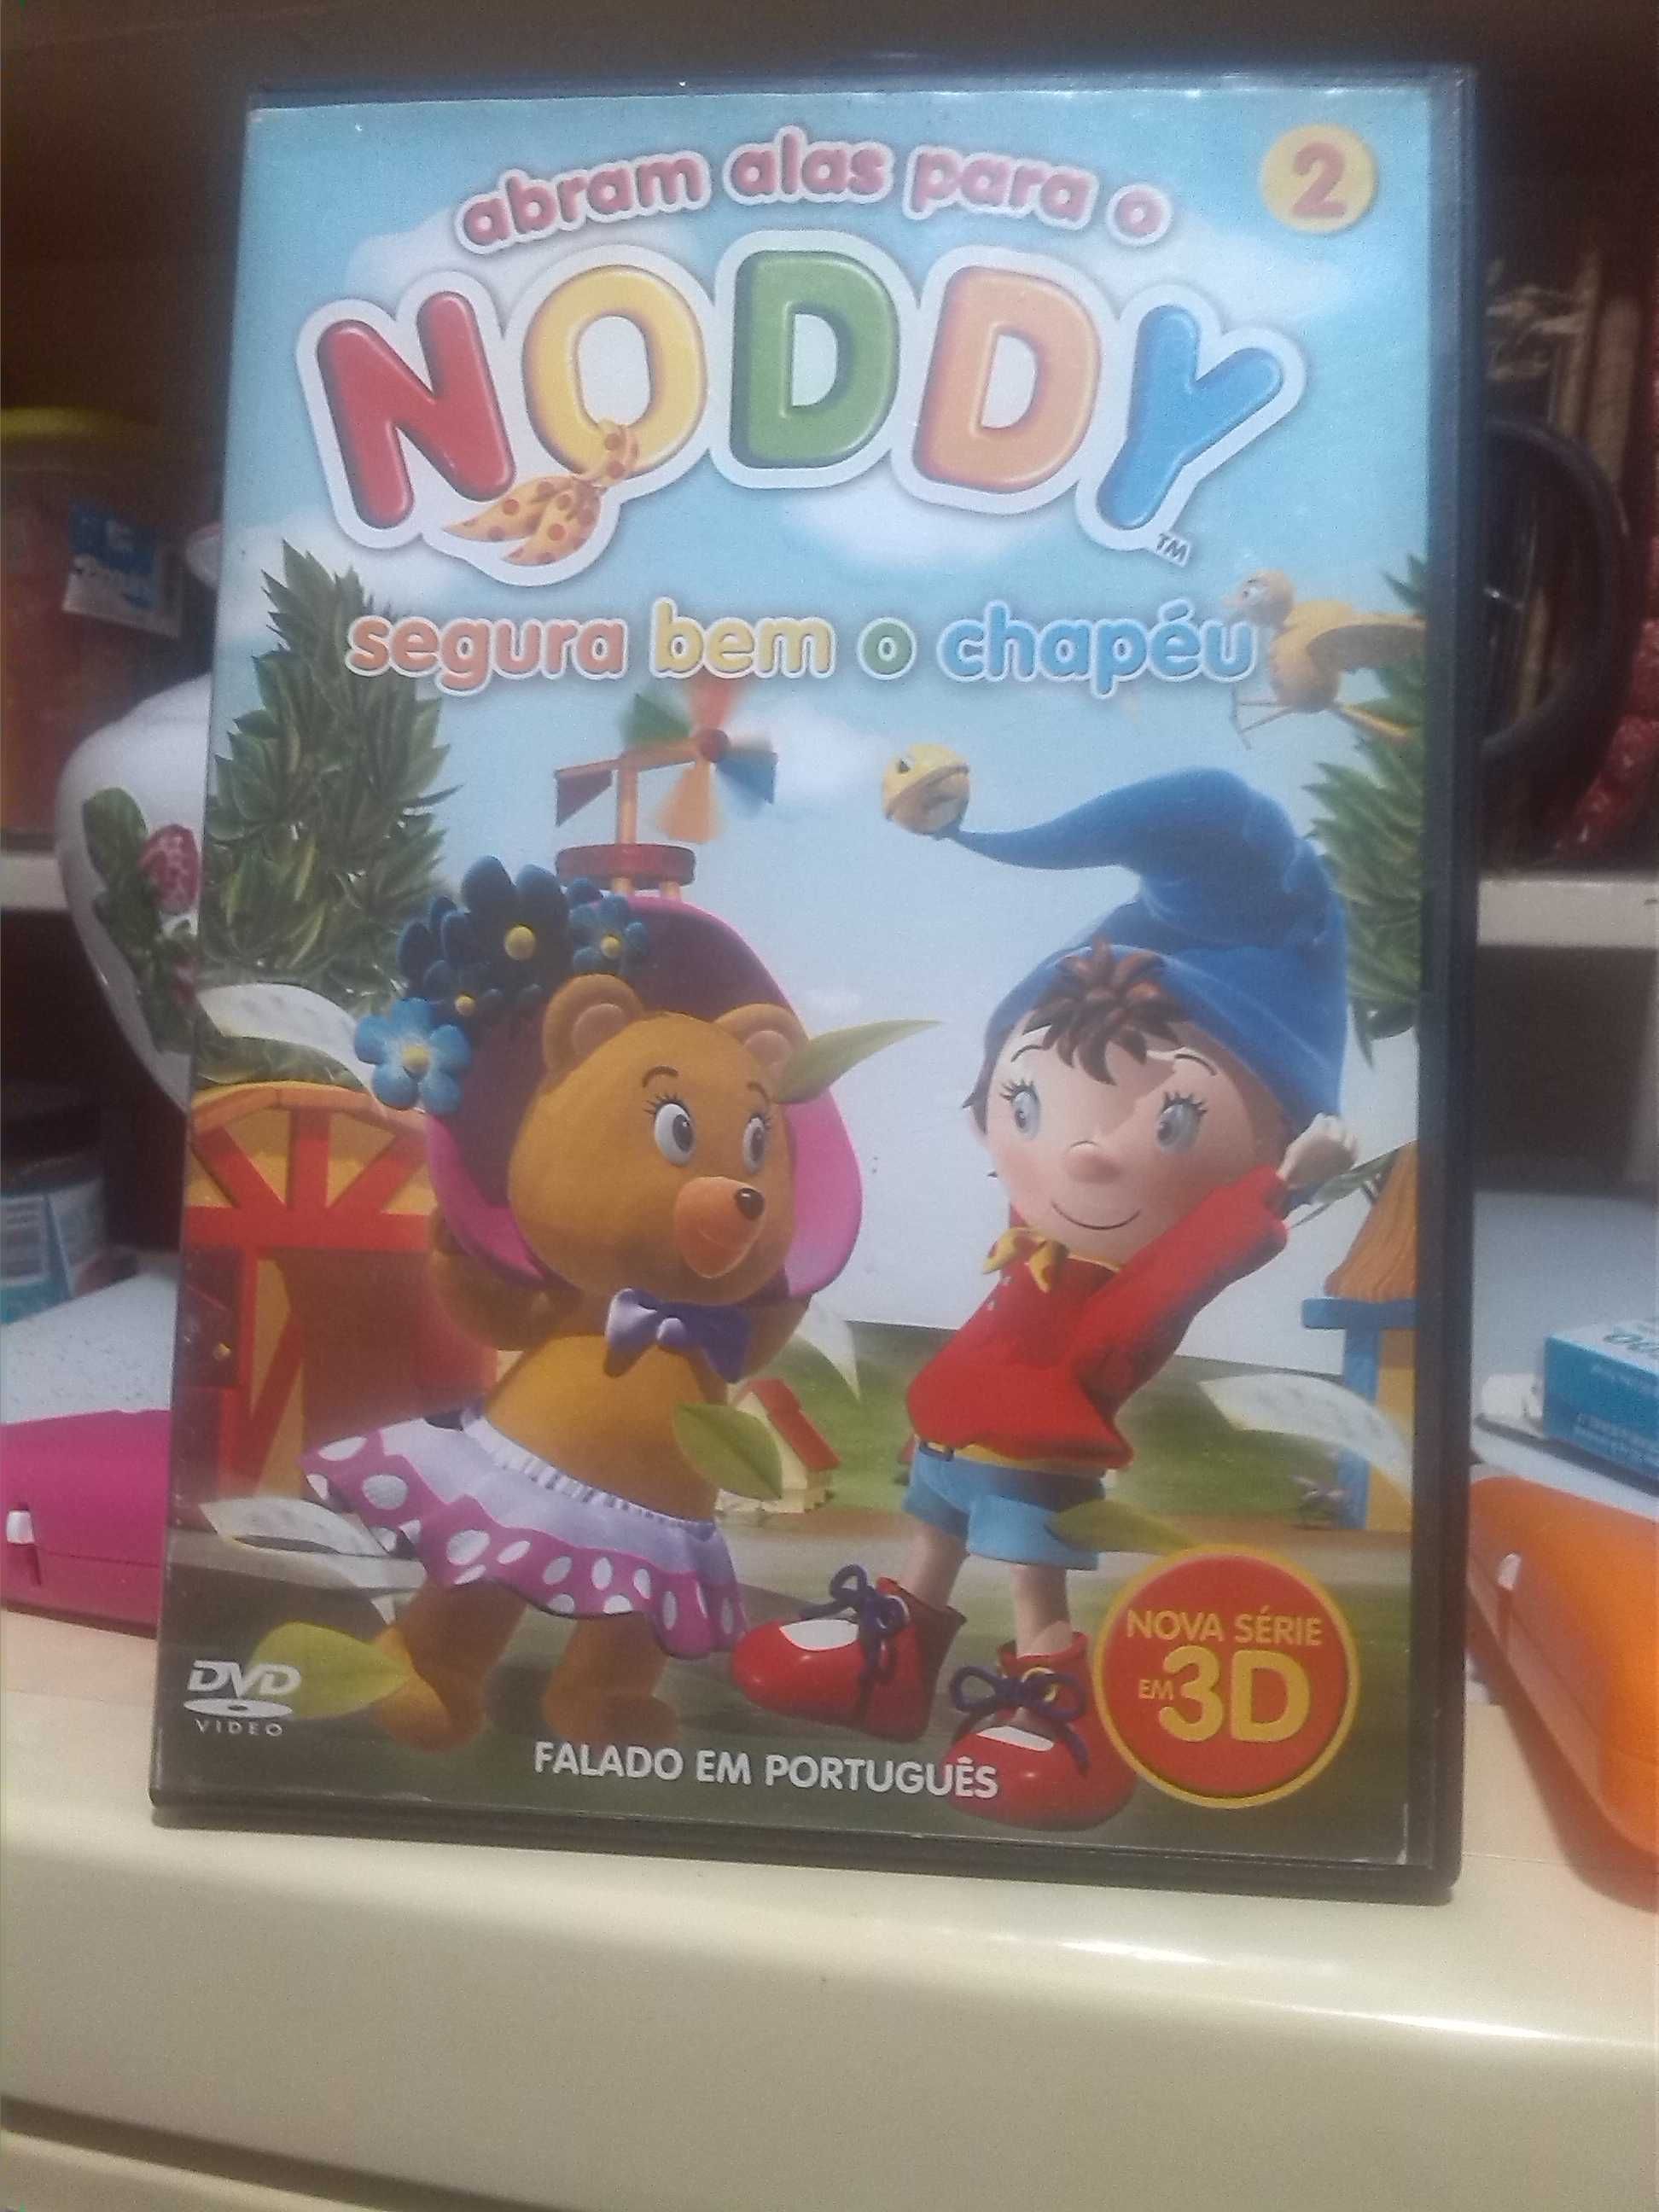 noddy dvd segura o chapeu- portes gratis